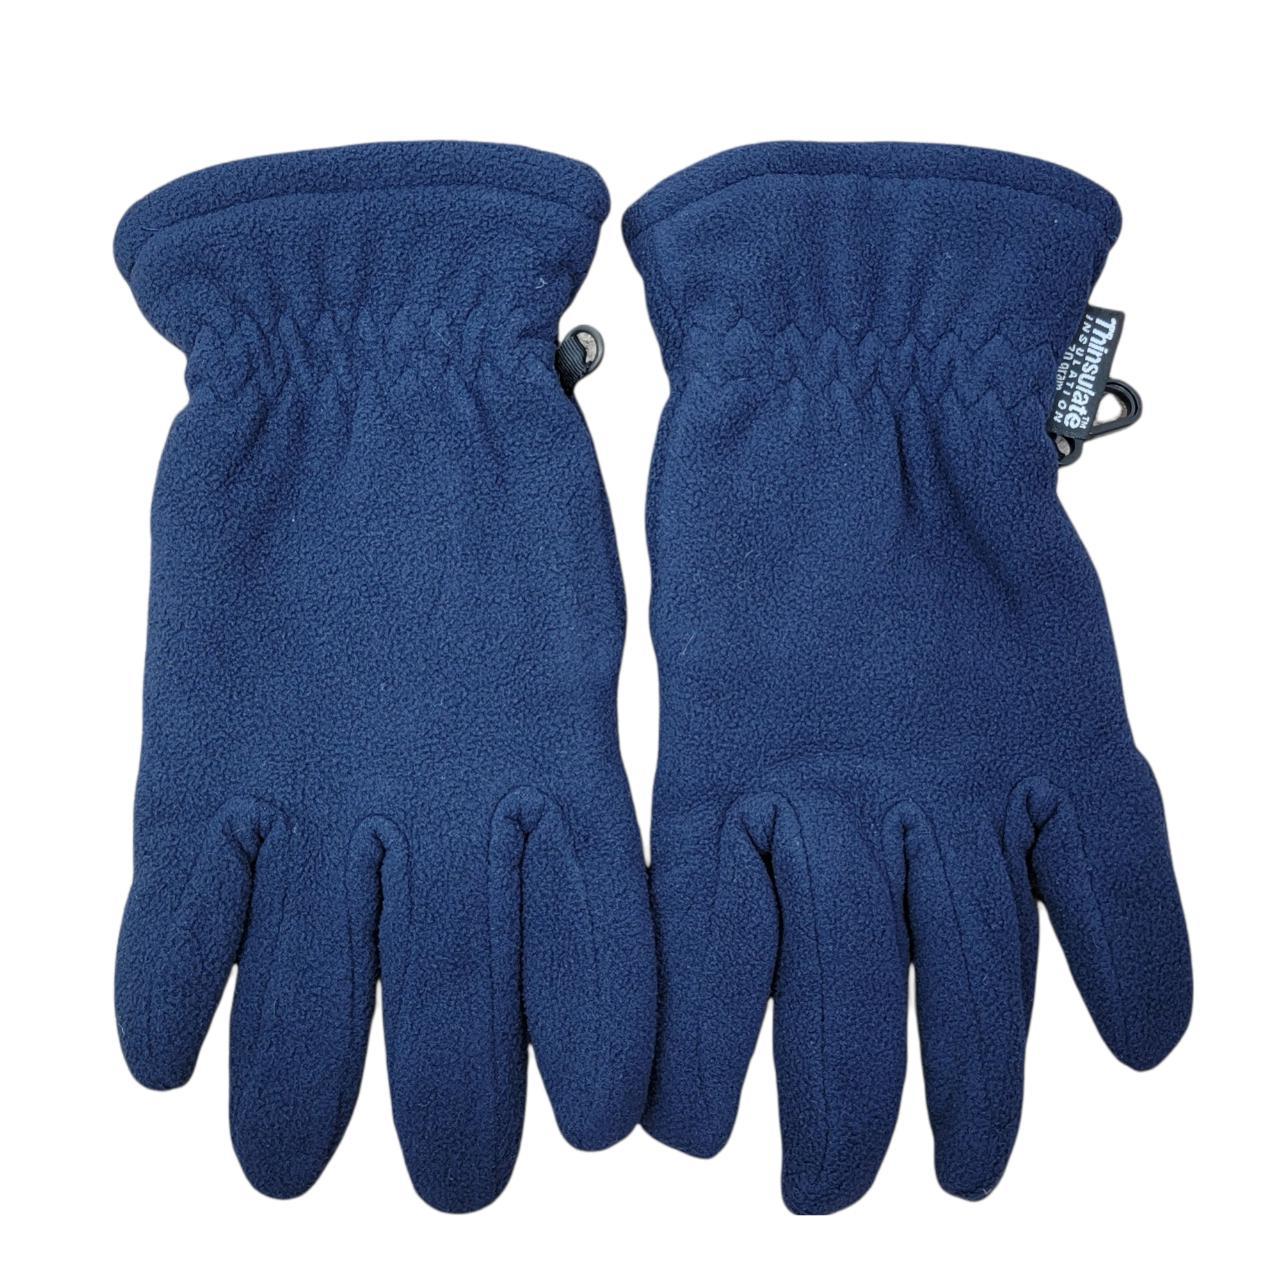 Product Image 1 - Blue Fleece Gloves Unisex Adult